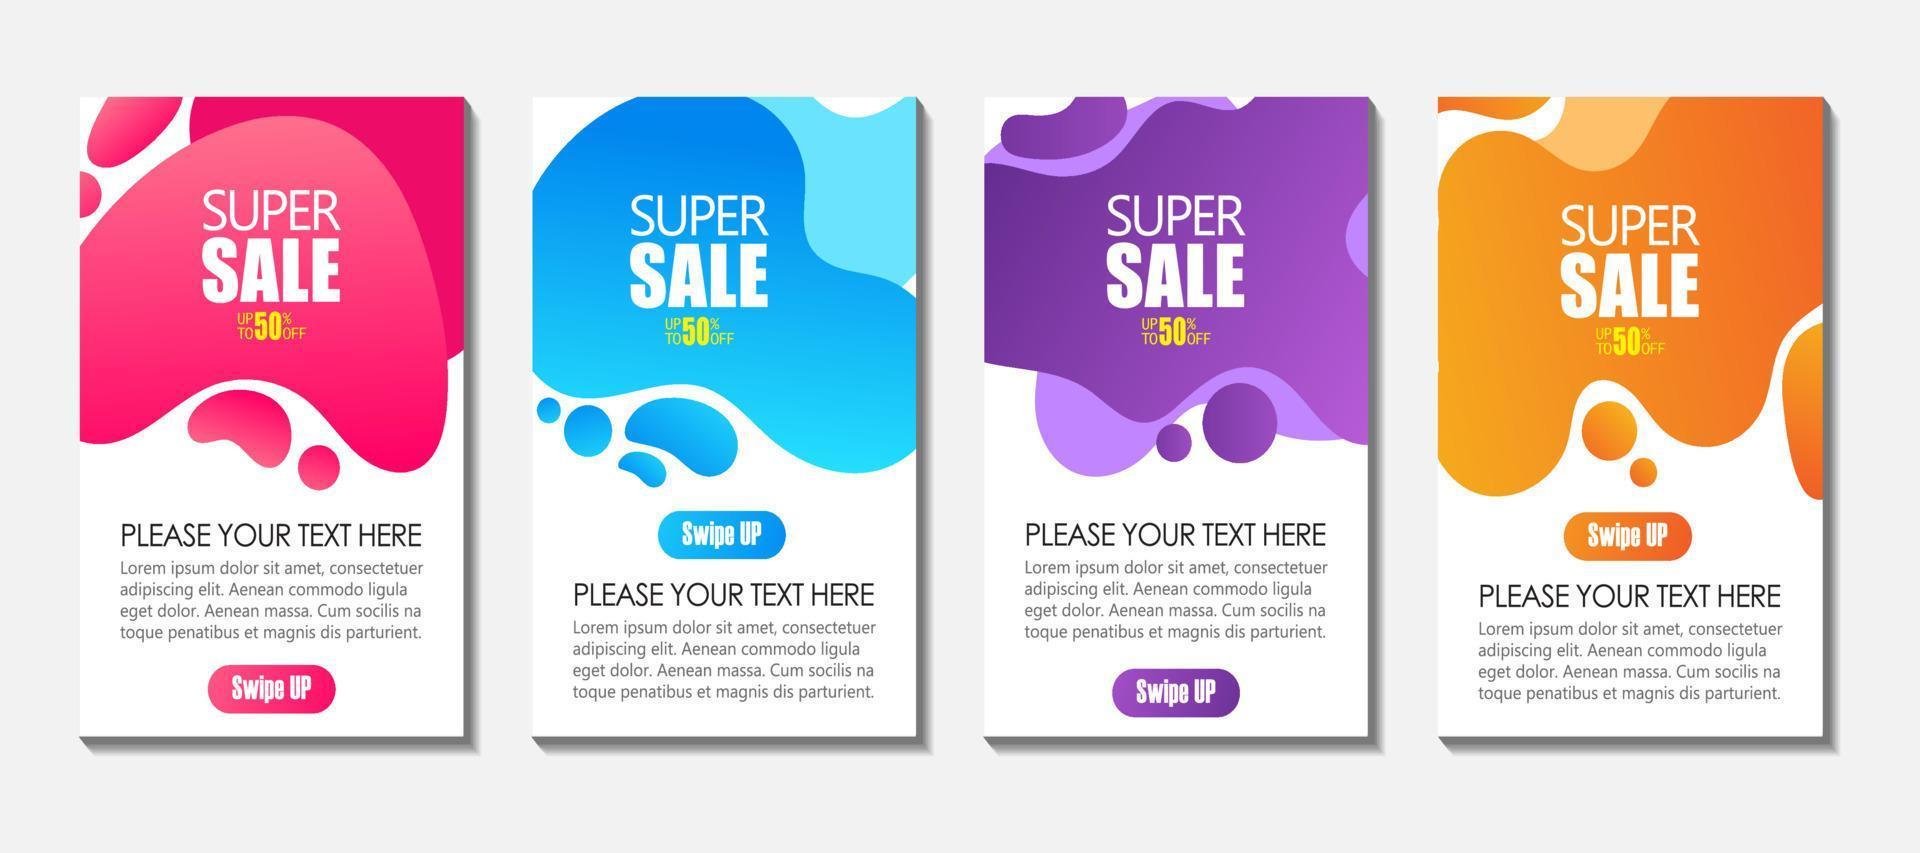 Modern Fluid For Super Sale Banners Design. Discount Banner Promotion Template. vector